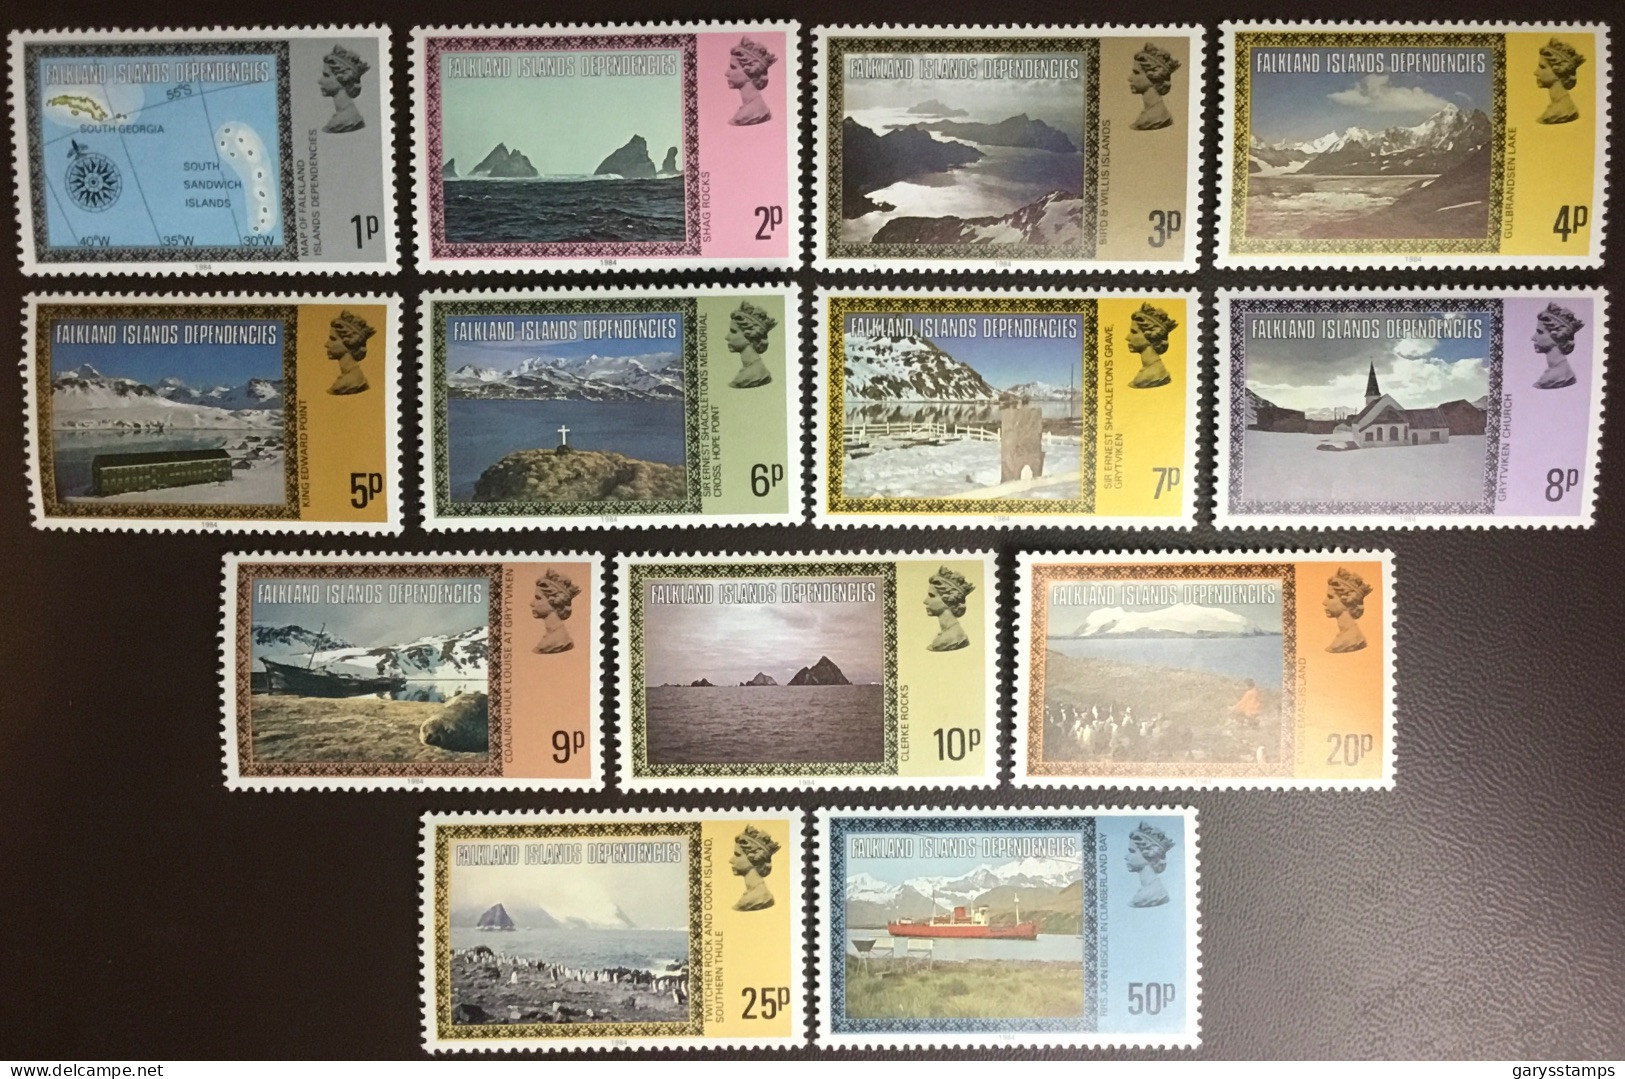 Falkland Islands Dependencies 1984 Definitives Set With Imprint Date MNH - Géorgie Du Sud